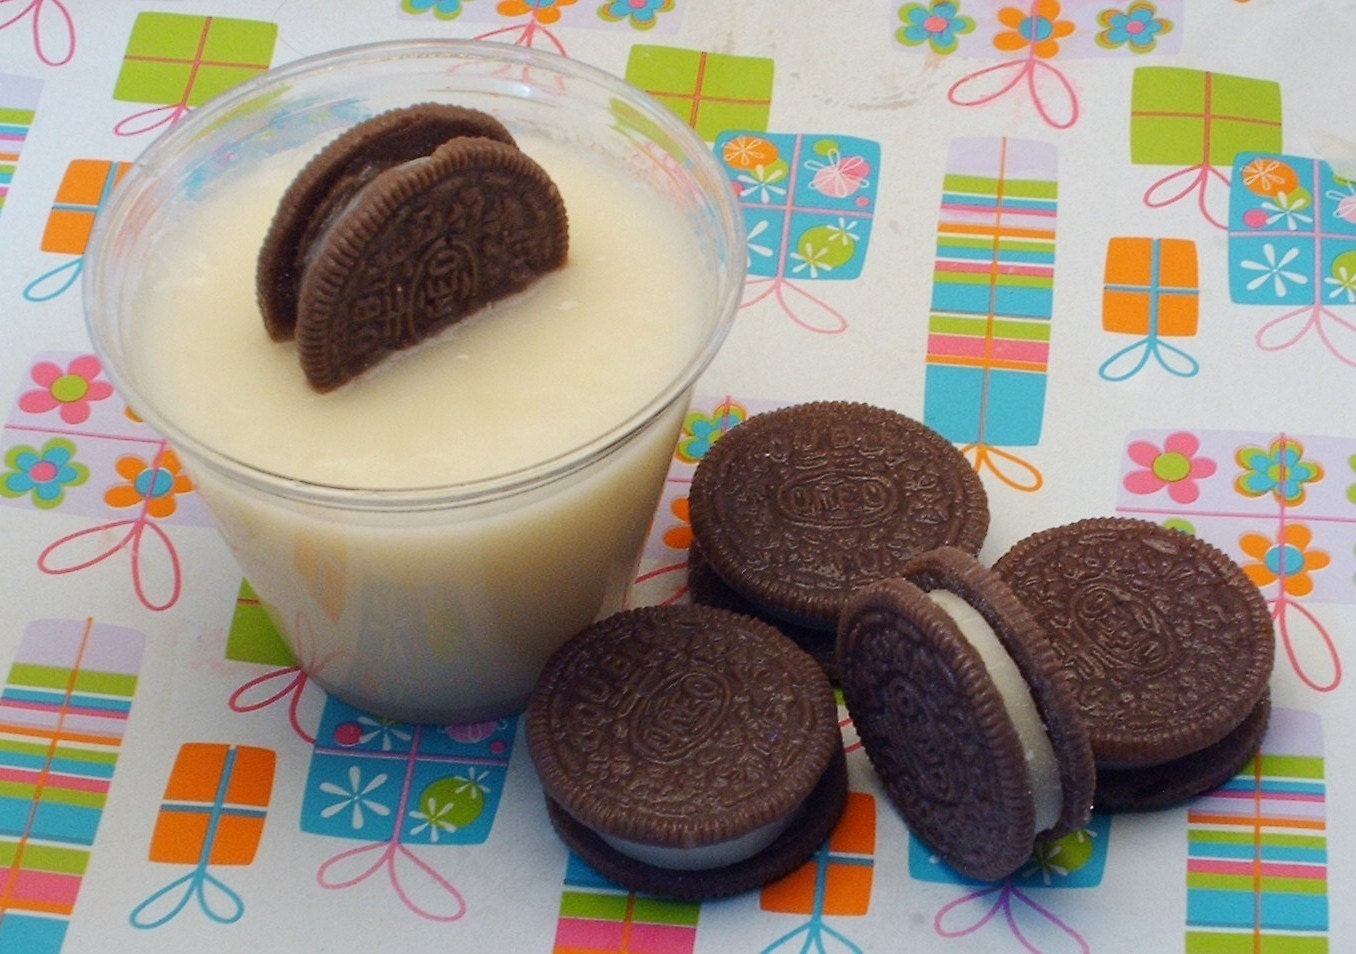 Oreo and Milk with Double-Stuf Oreos (Vanilla Cream and Chocolate Scented)